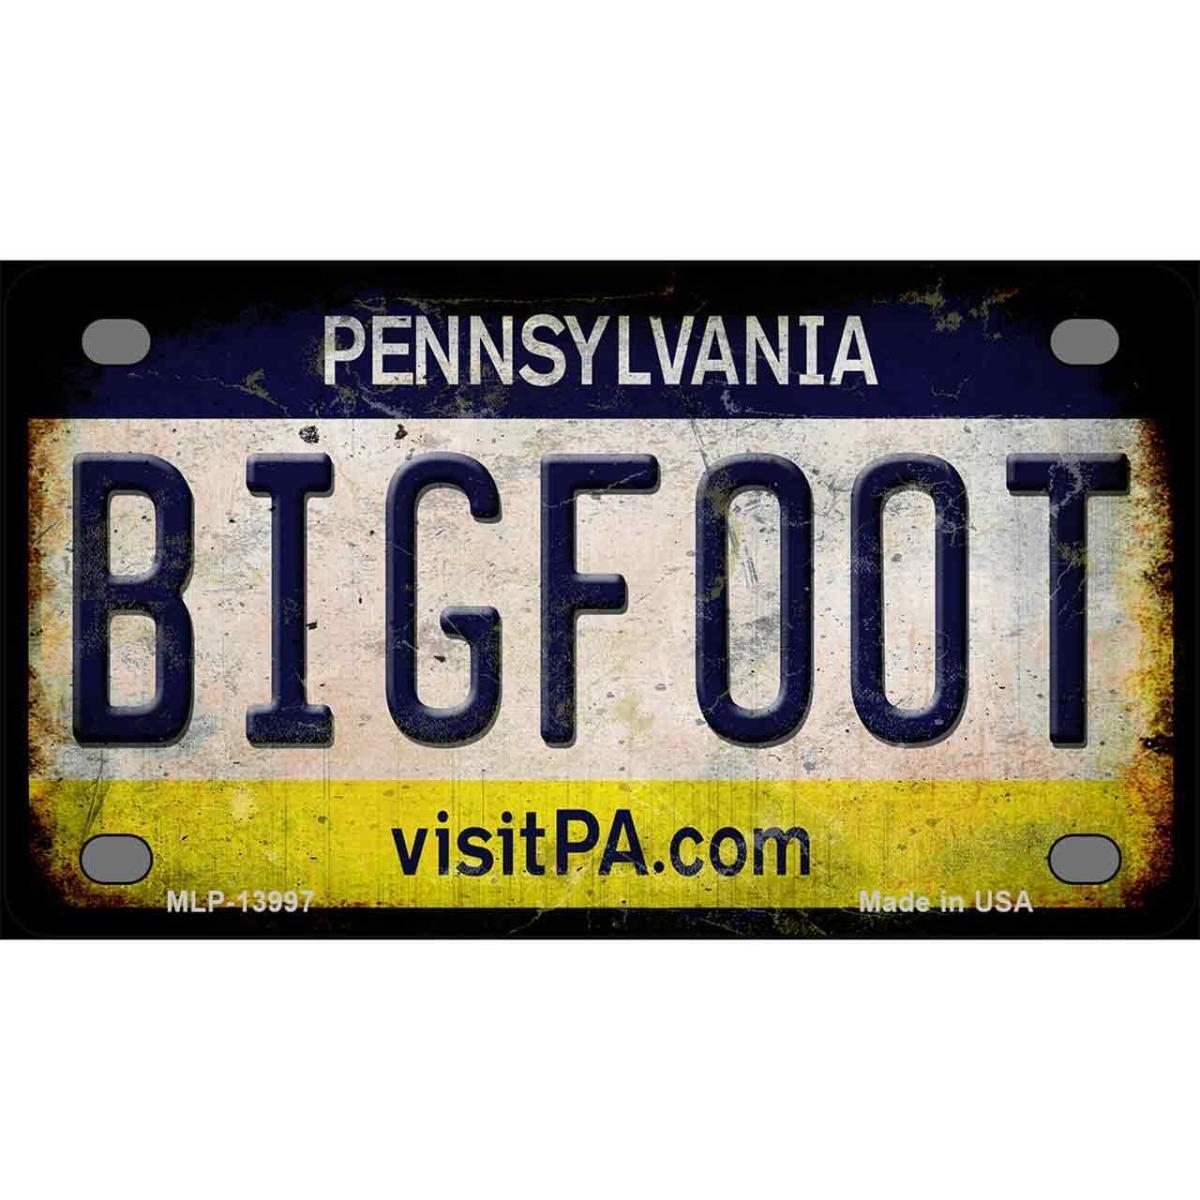 Smart Blonde MLP-13997 2.2 x 4 in. Bigfoot Pennsylvania Novelty Mini Metal License Plate